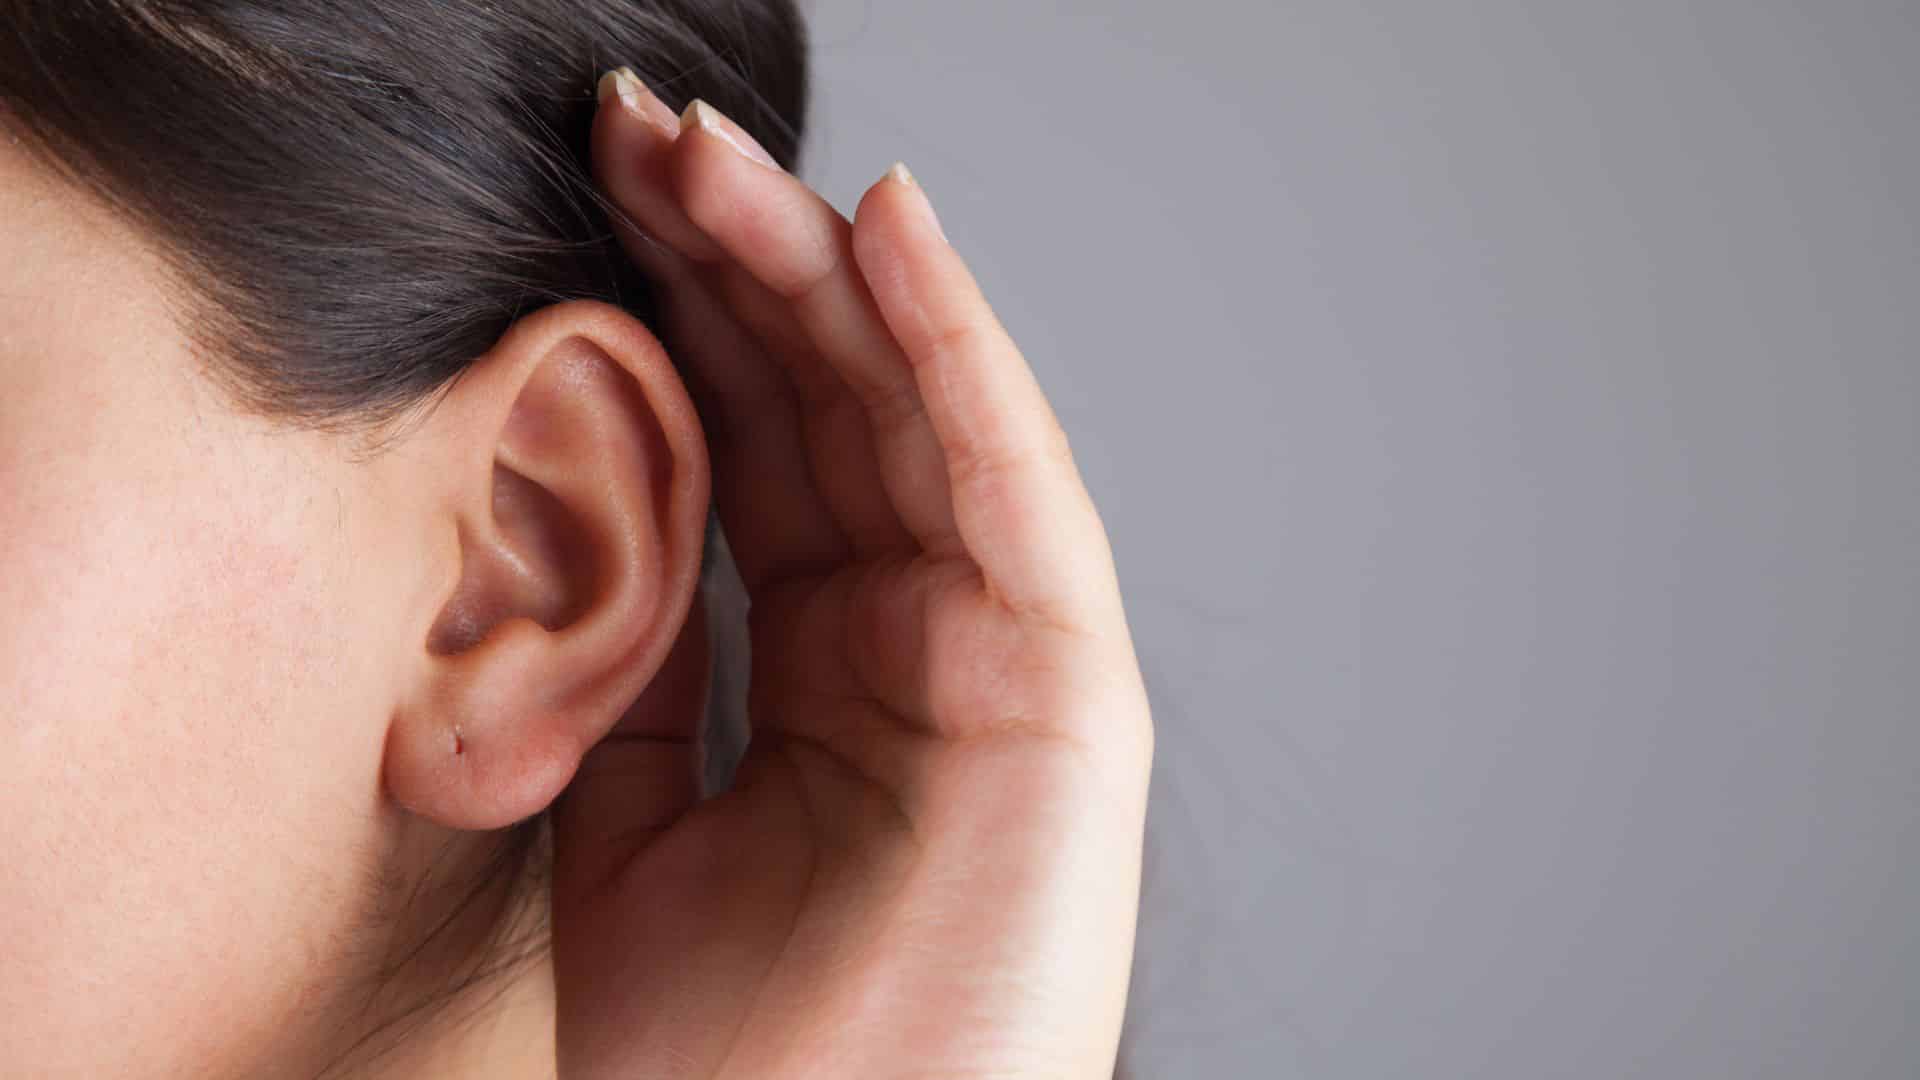 Image showing hearing